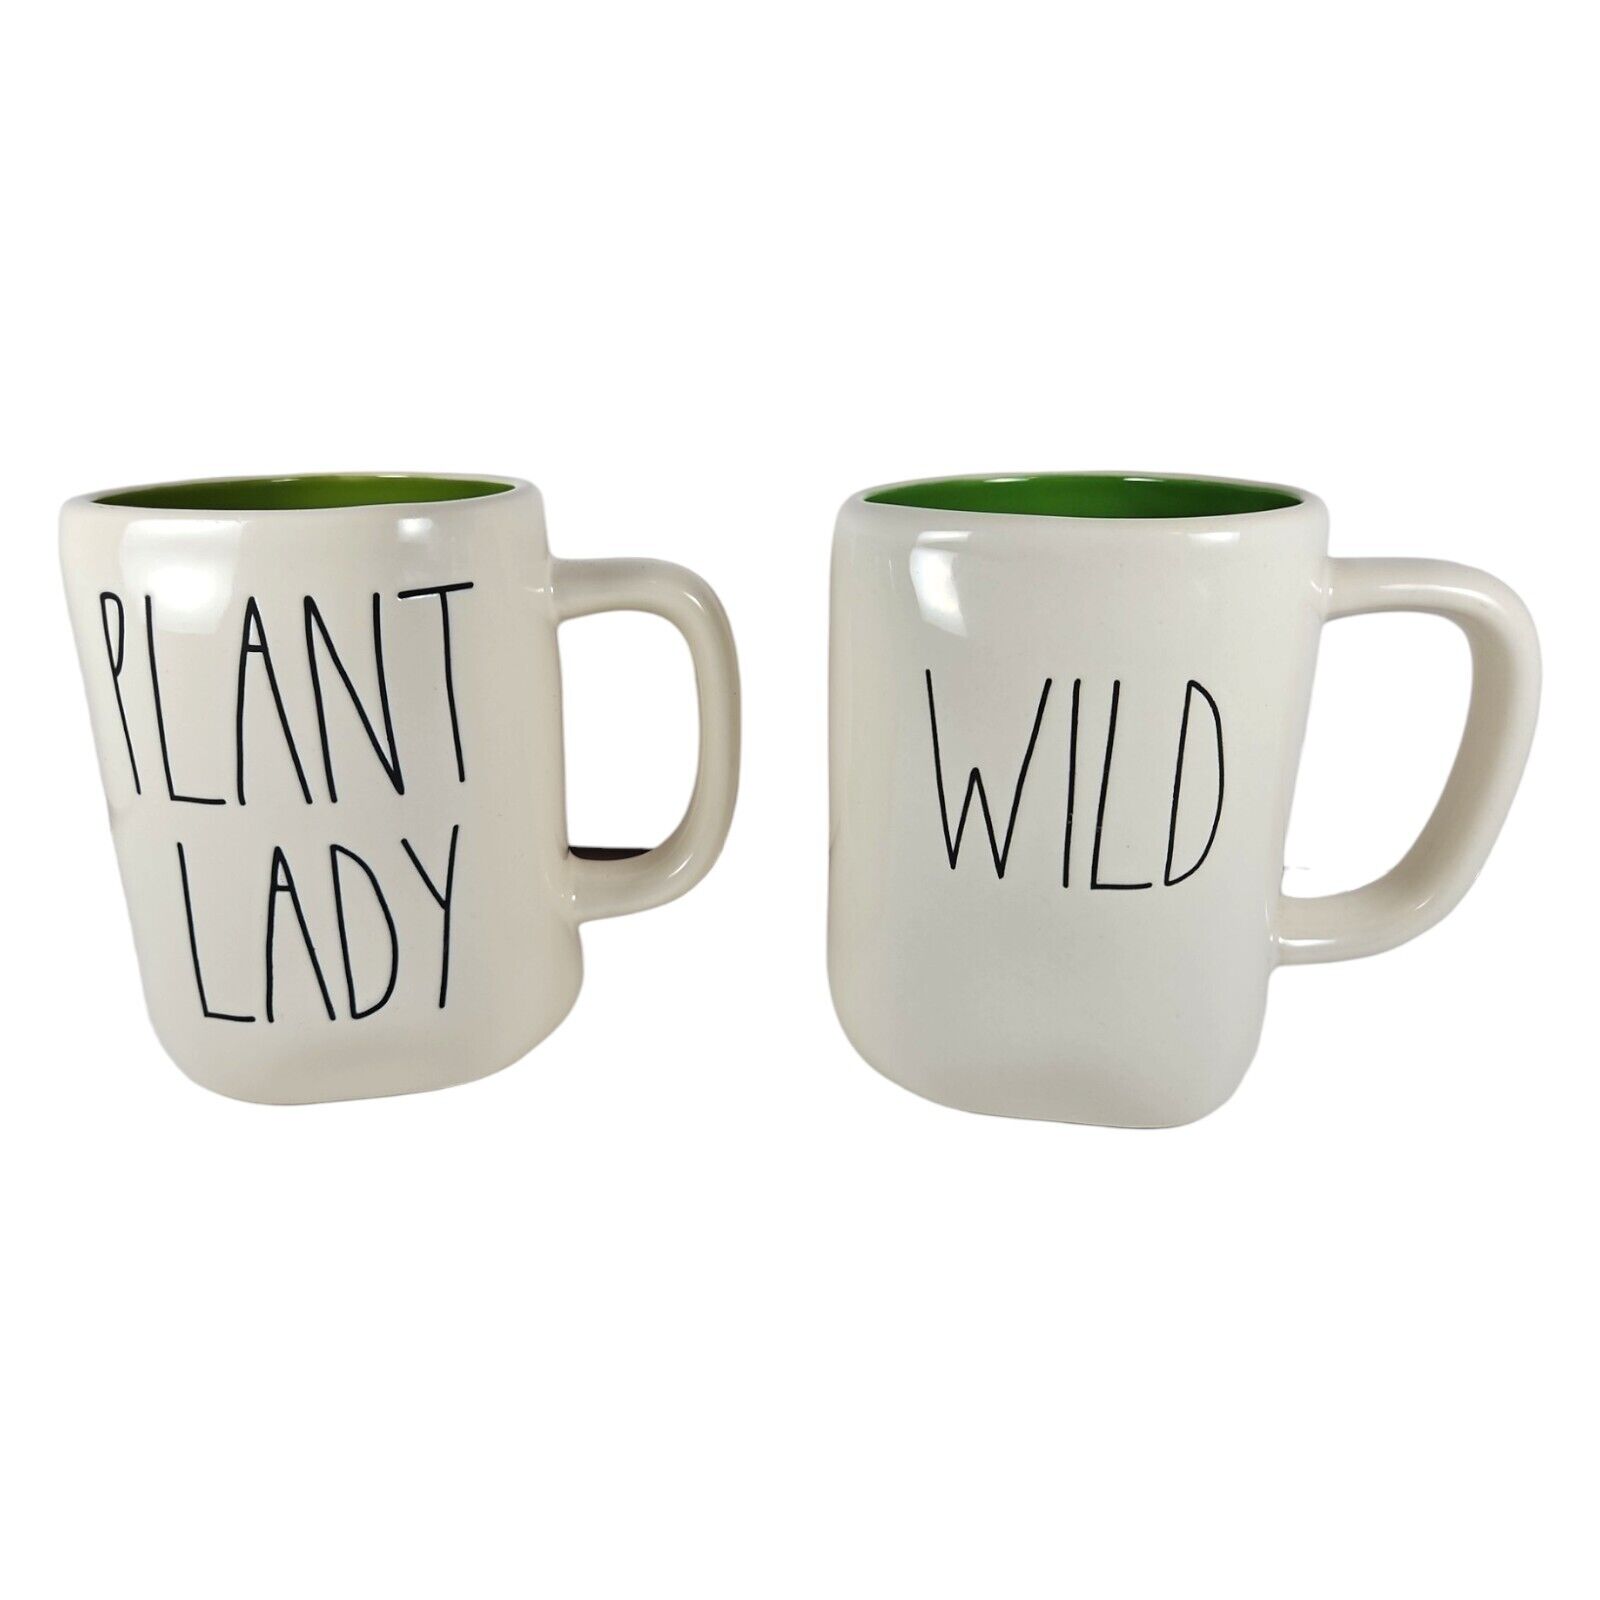 2 Rae Dunn Coffee Mugs 'Plant Lady’ & 'Wild' White/Green Ceramic by Magenta